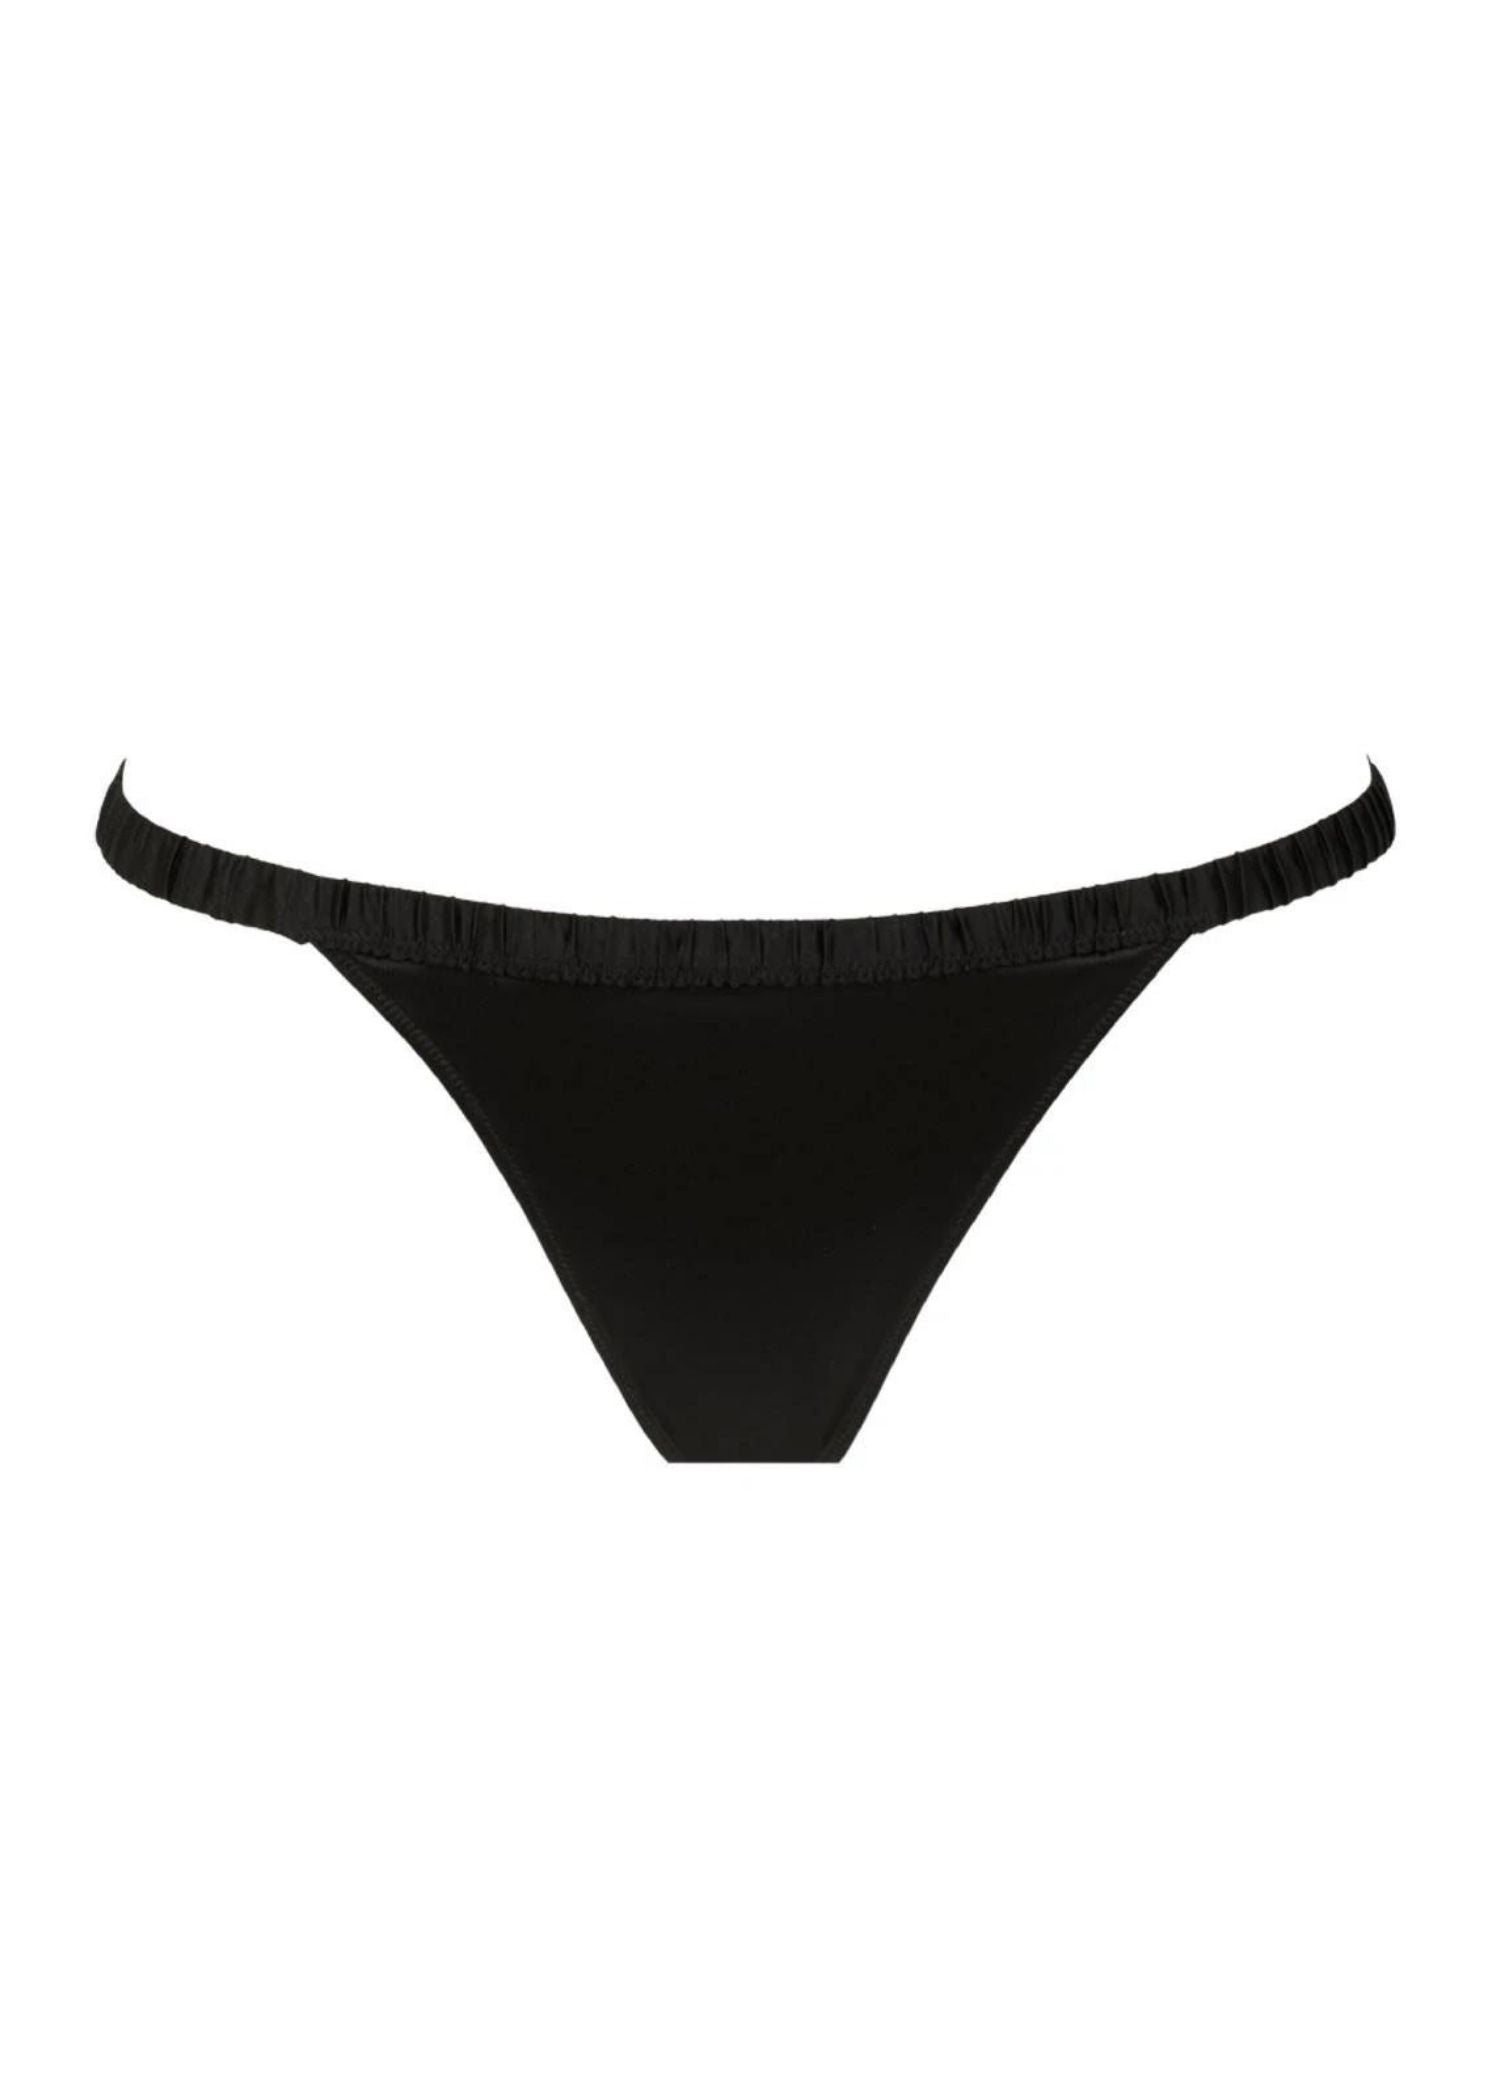 Atelier Amour Please Me Culotte Brief - Black Mesh Backless Underwear - Avec Amour Sexy Lingerie